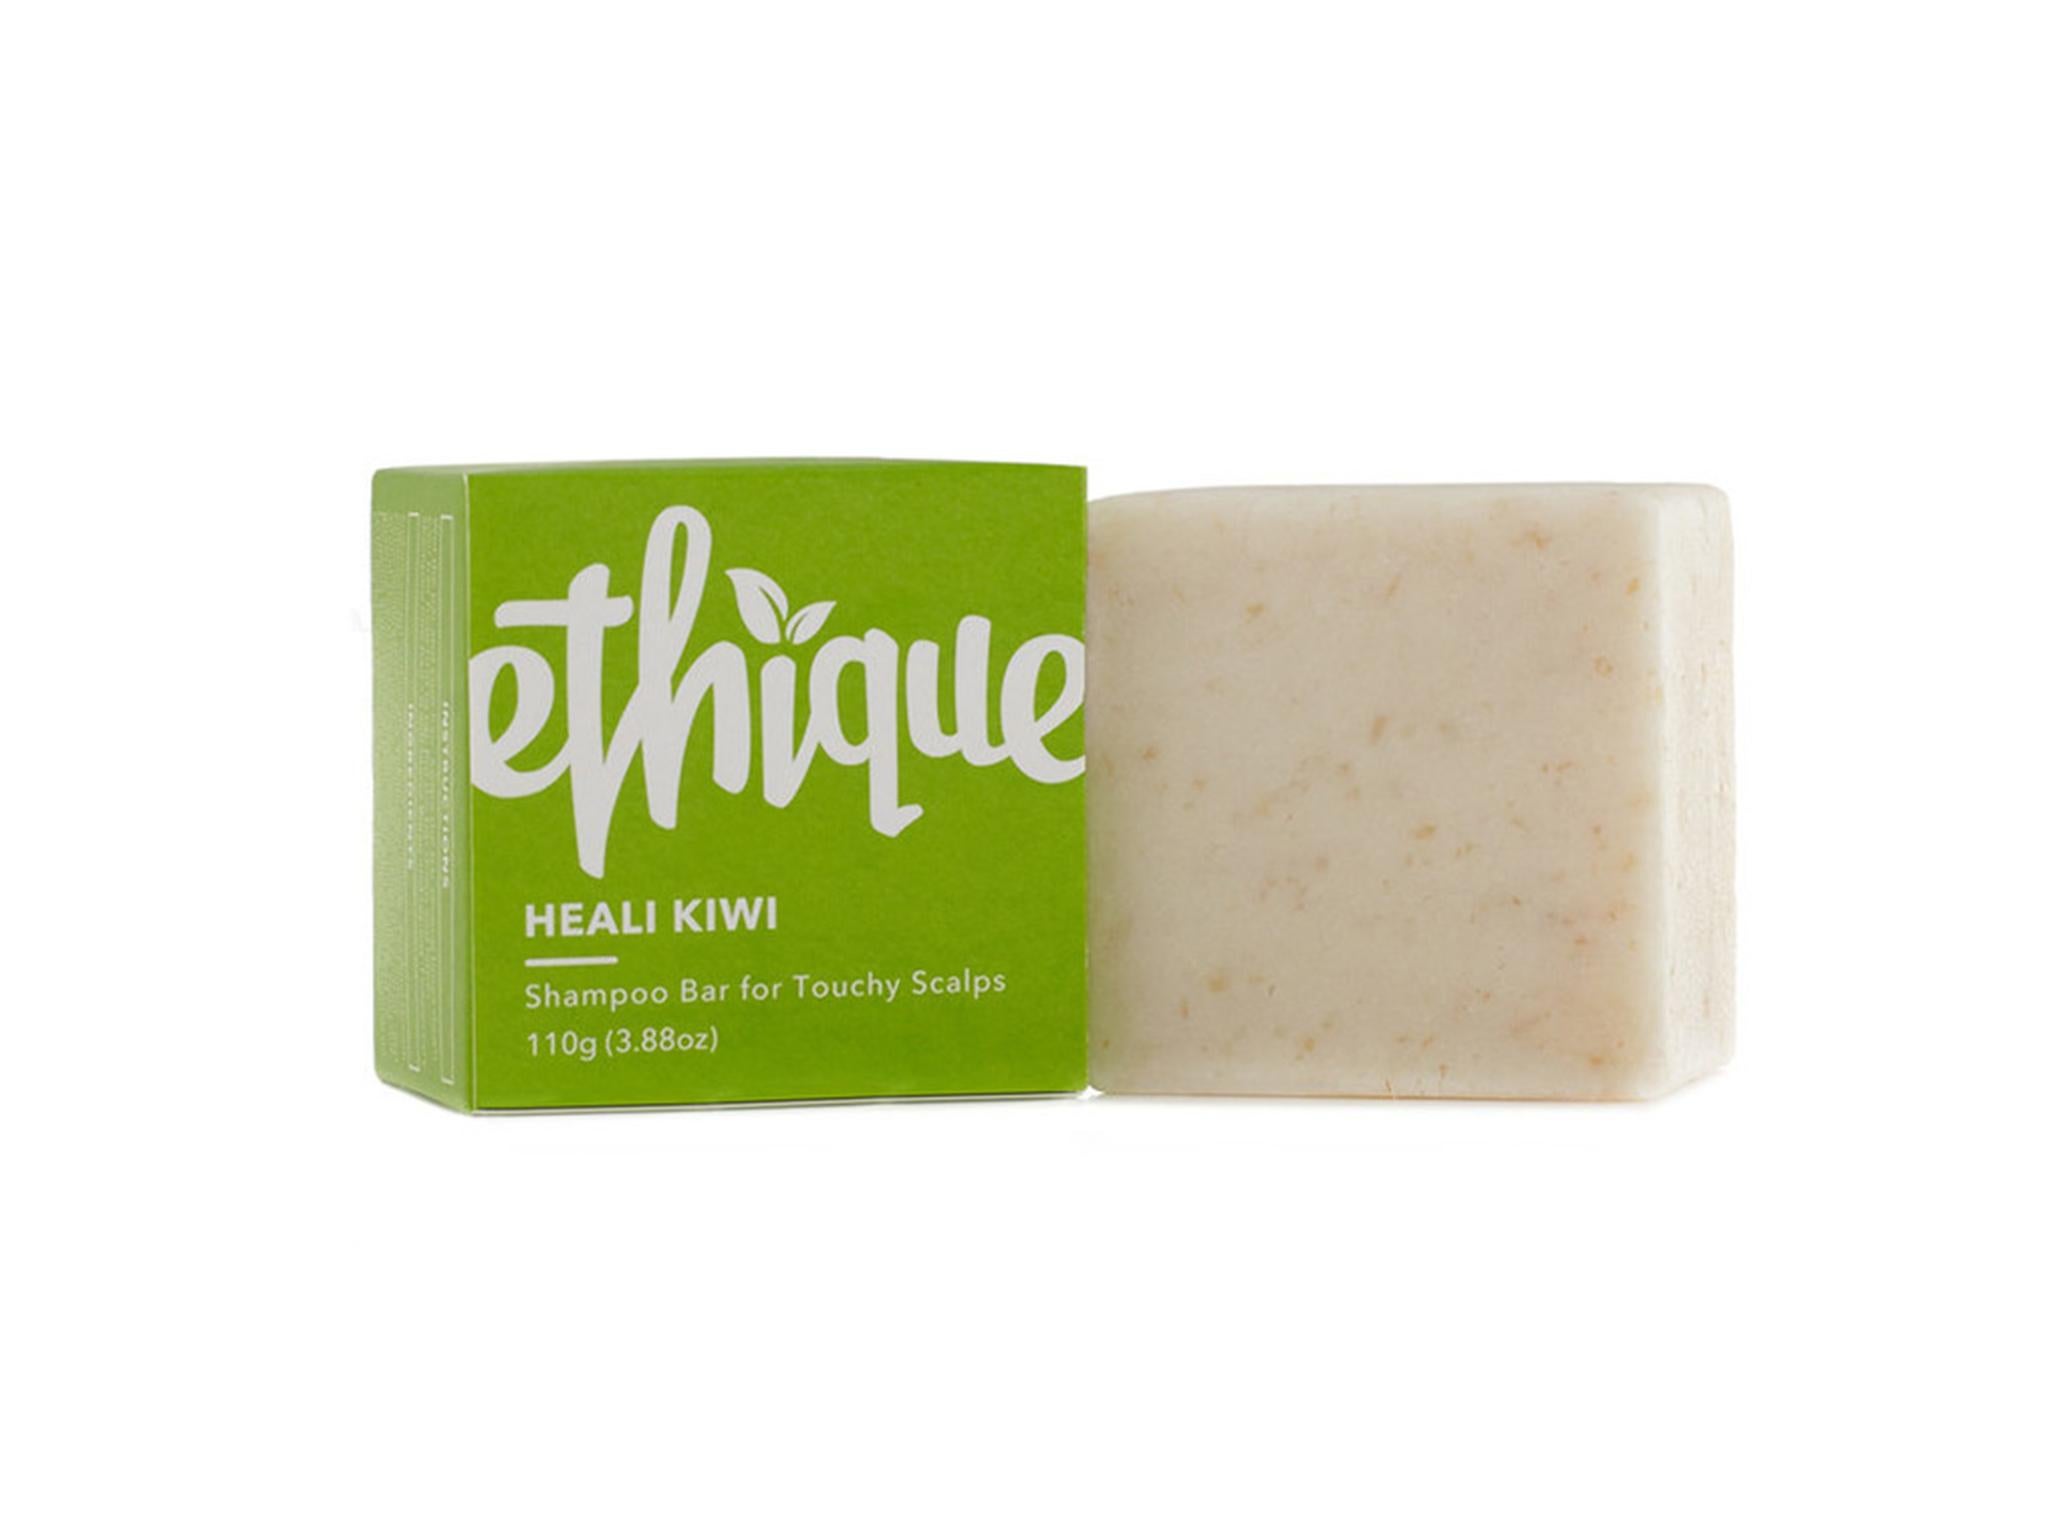 ethique-heali-kiwi-solid-shampoo-110g.jpg